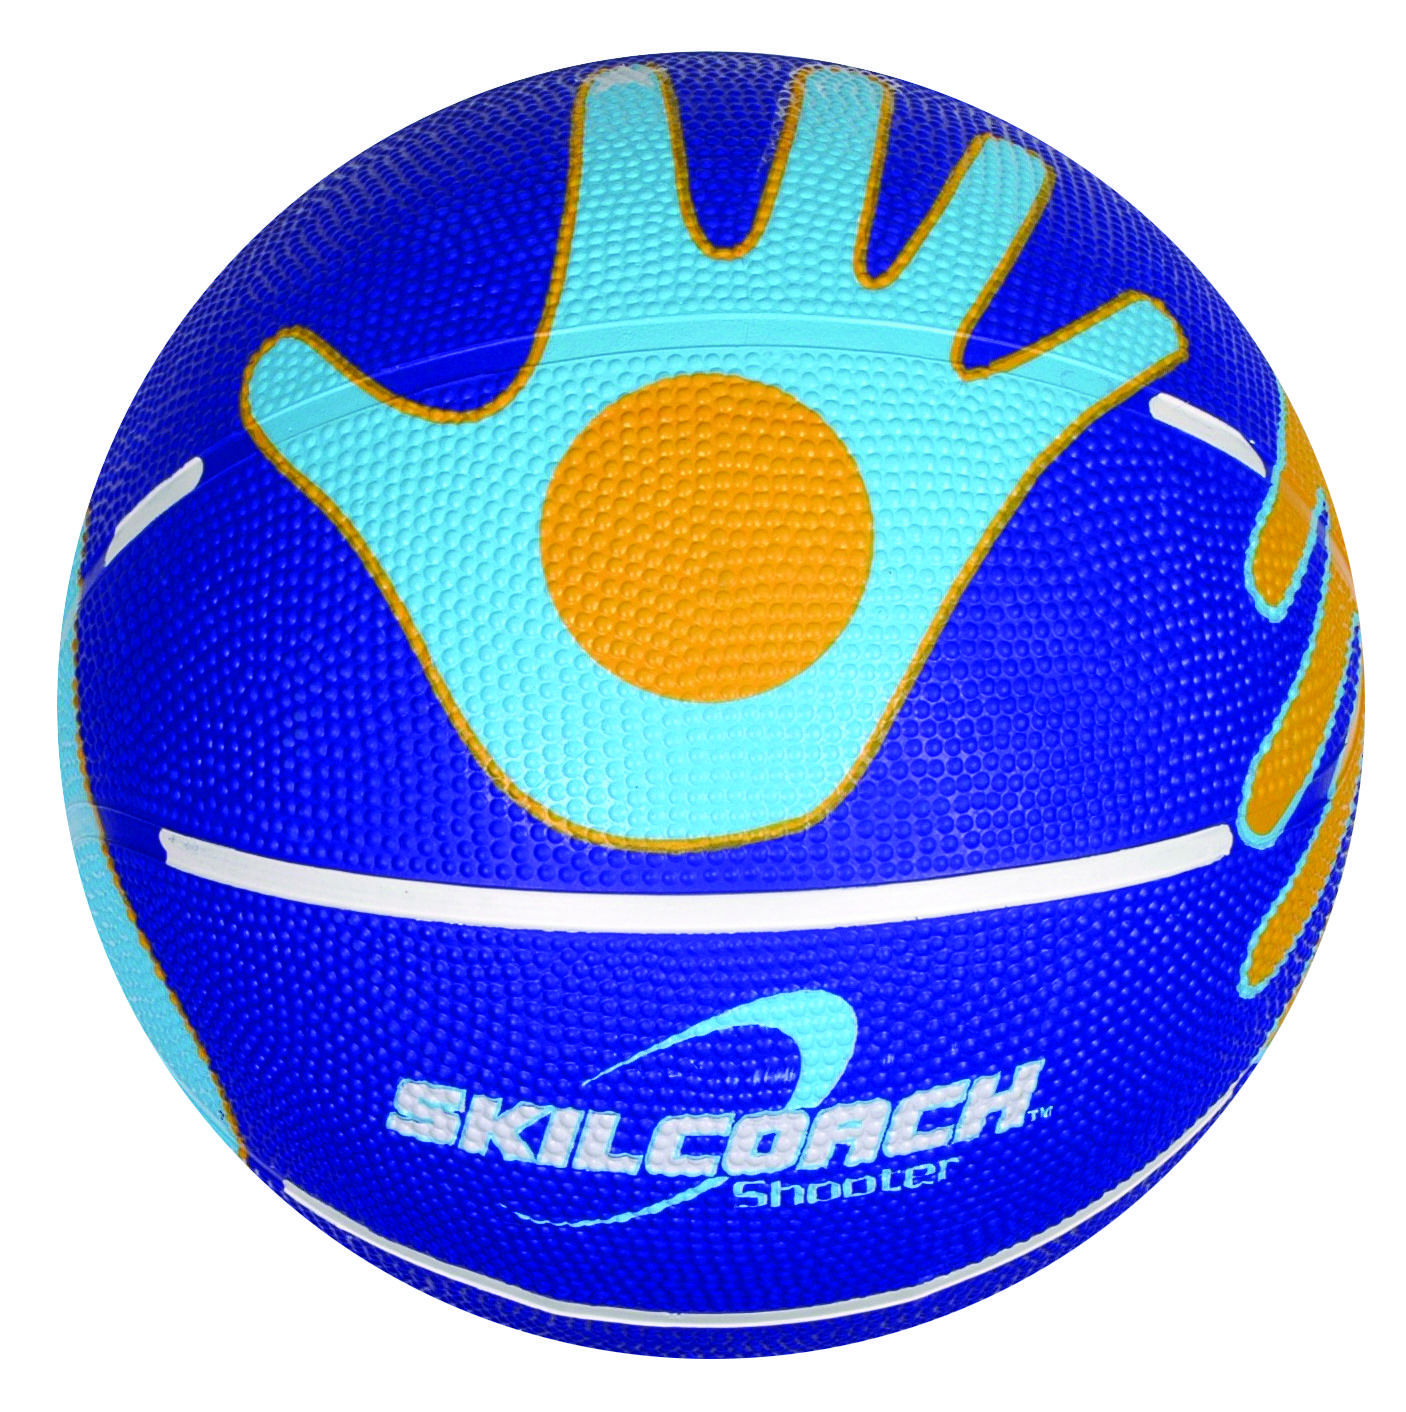 Skilcoach Learner Basketball